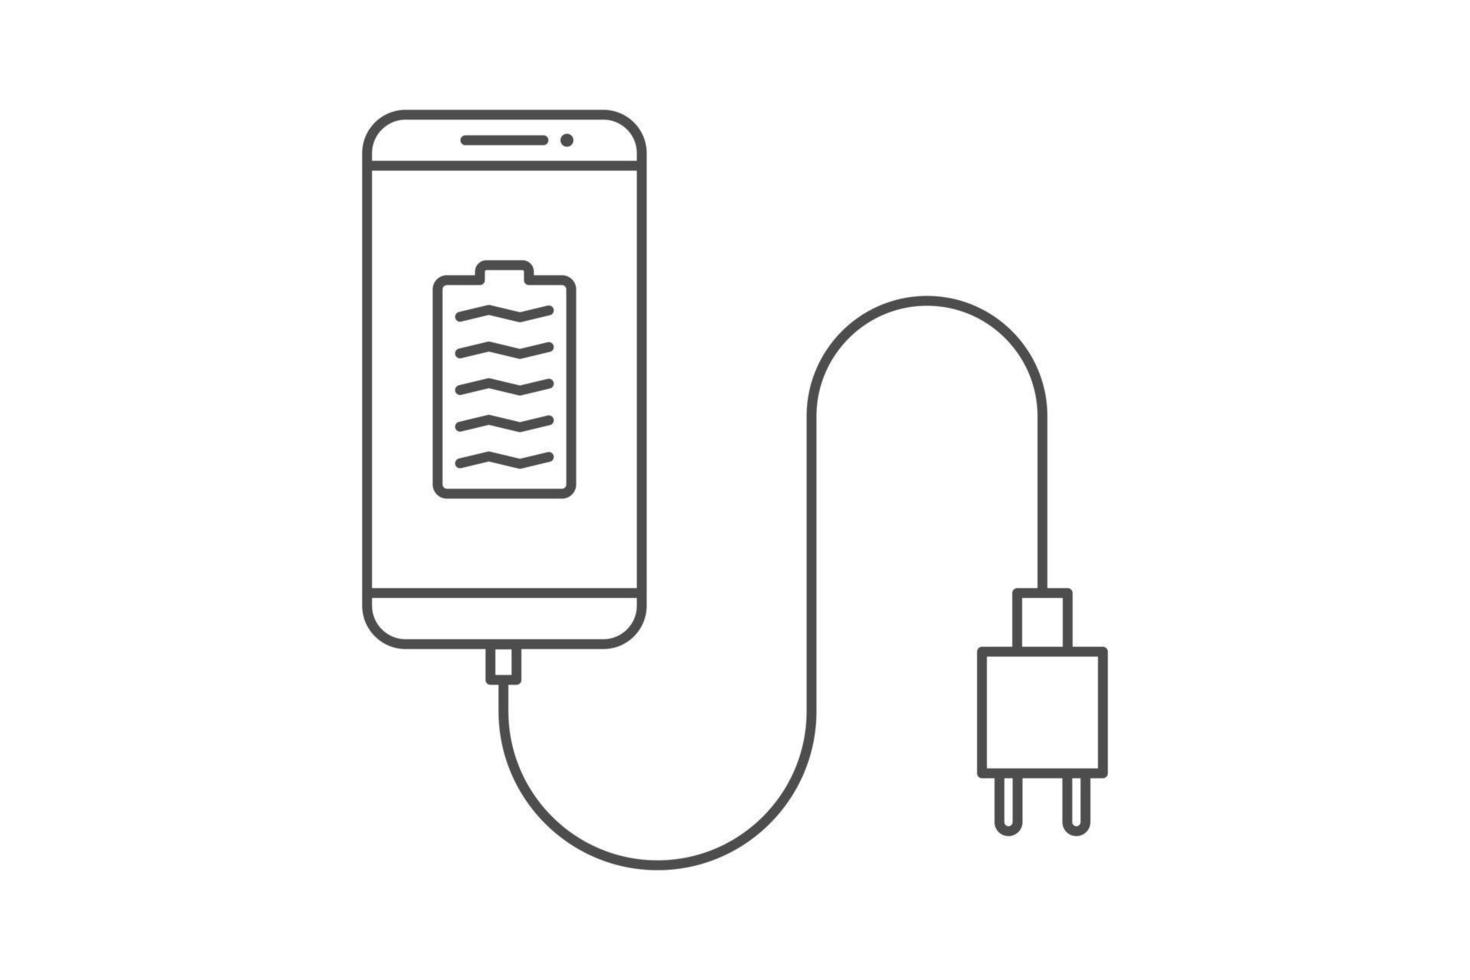 teléfono inteligente cargador adaptador línea icono firmar símbolo vector, teléfono inteligente, eléctrico enchufe, adaptador, lleno batería notificación vector